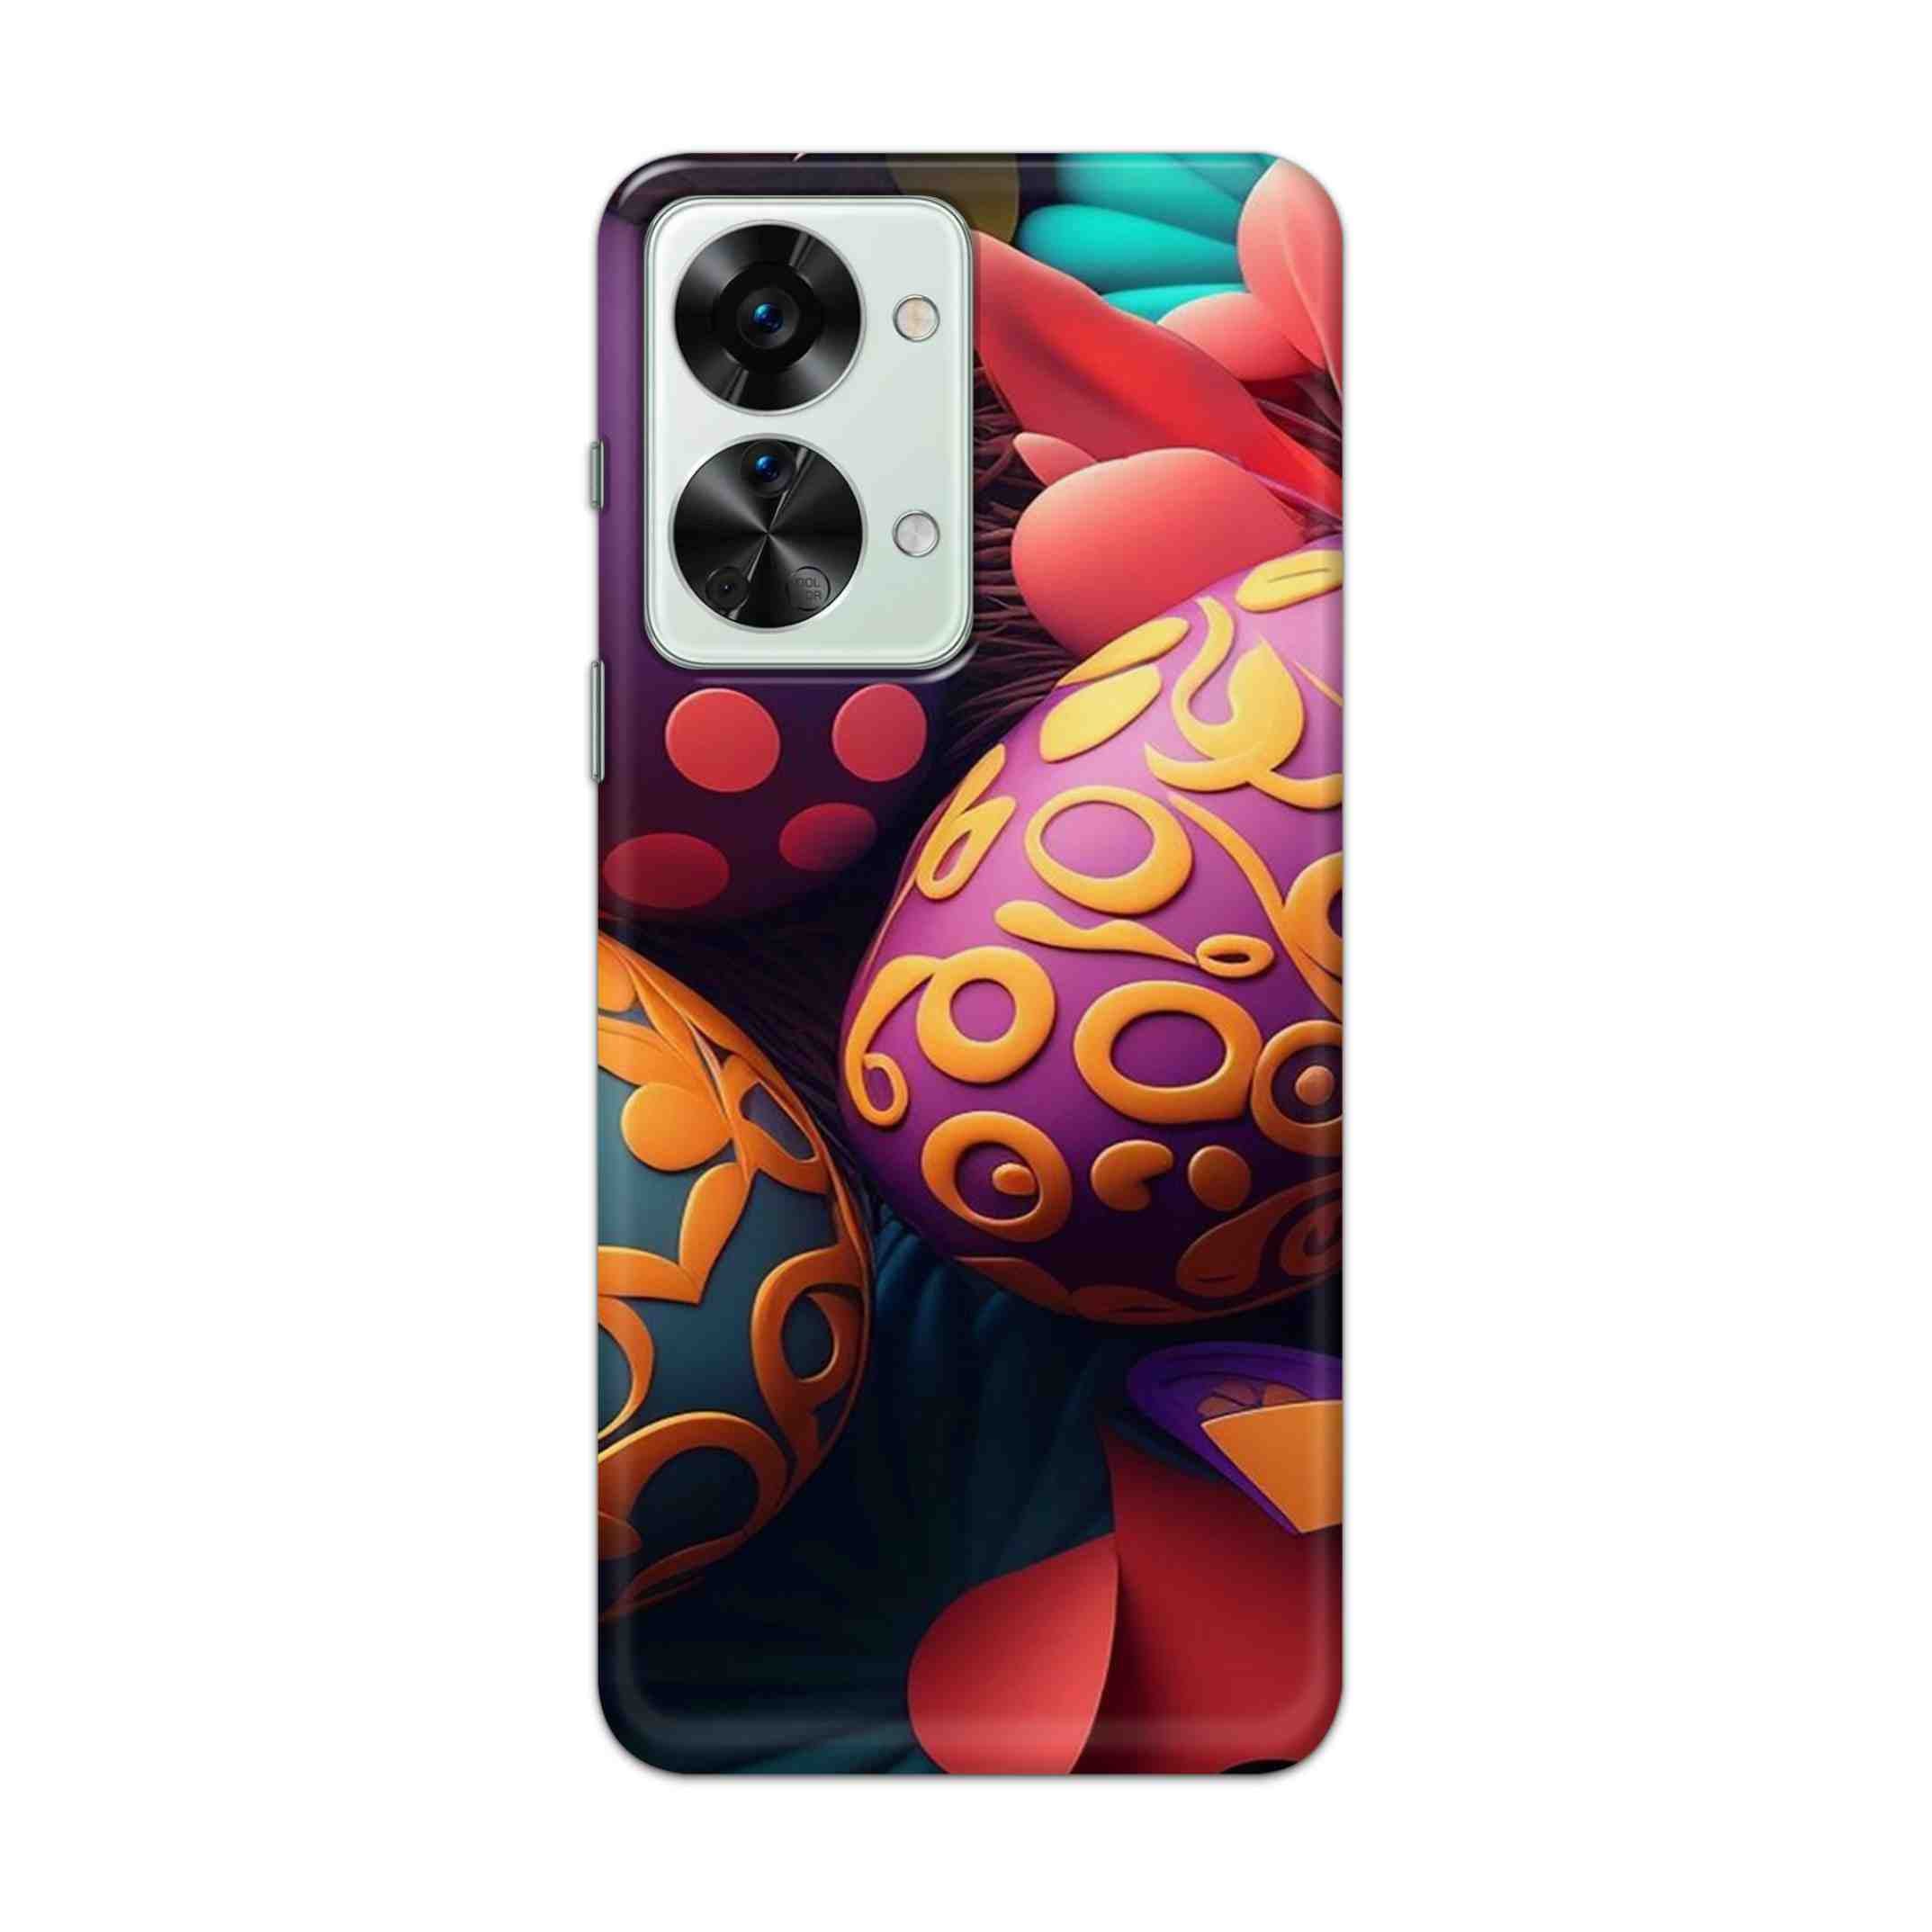 Buy Easter Egg Hard Back Mobile Phone Case Cover For OnePlus Nord 2T 5G Online